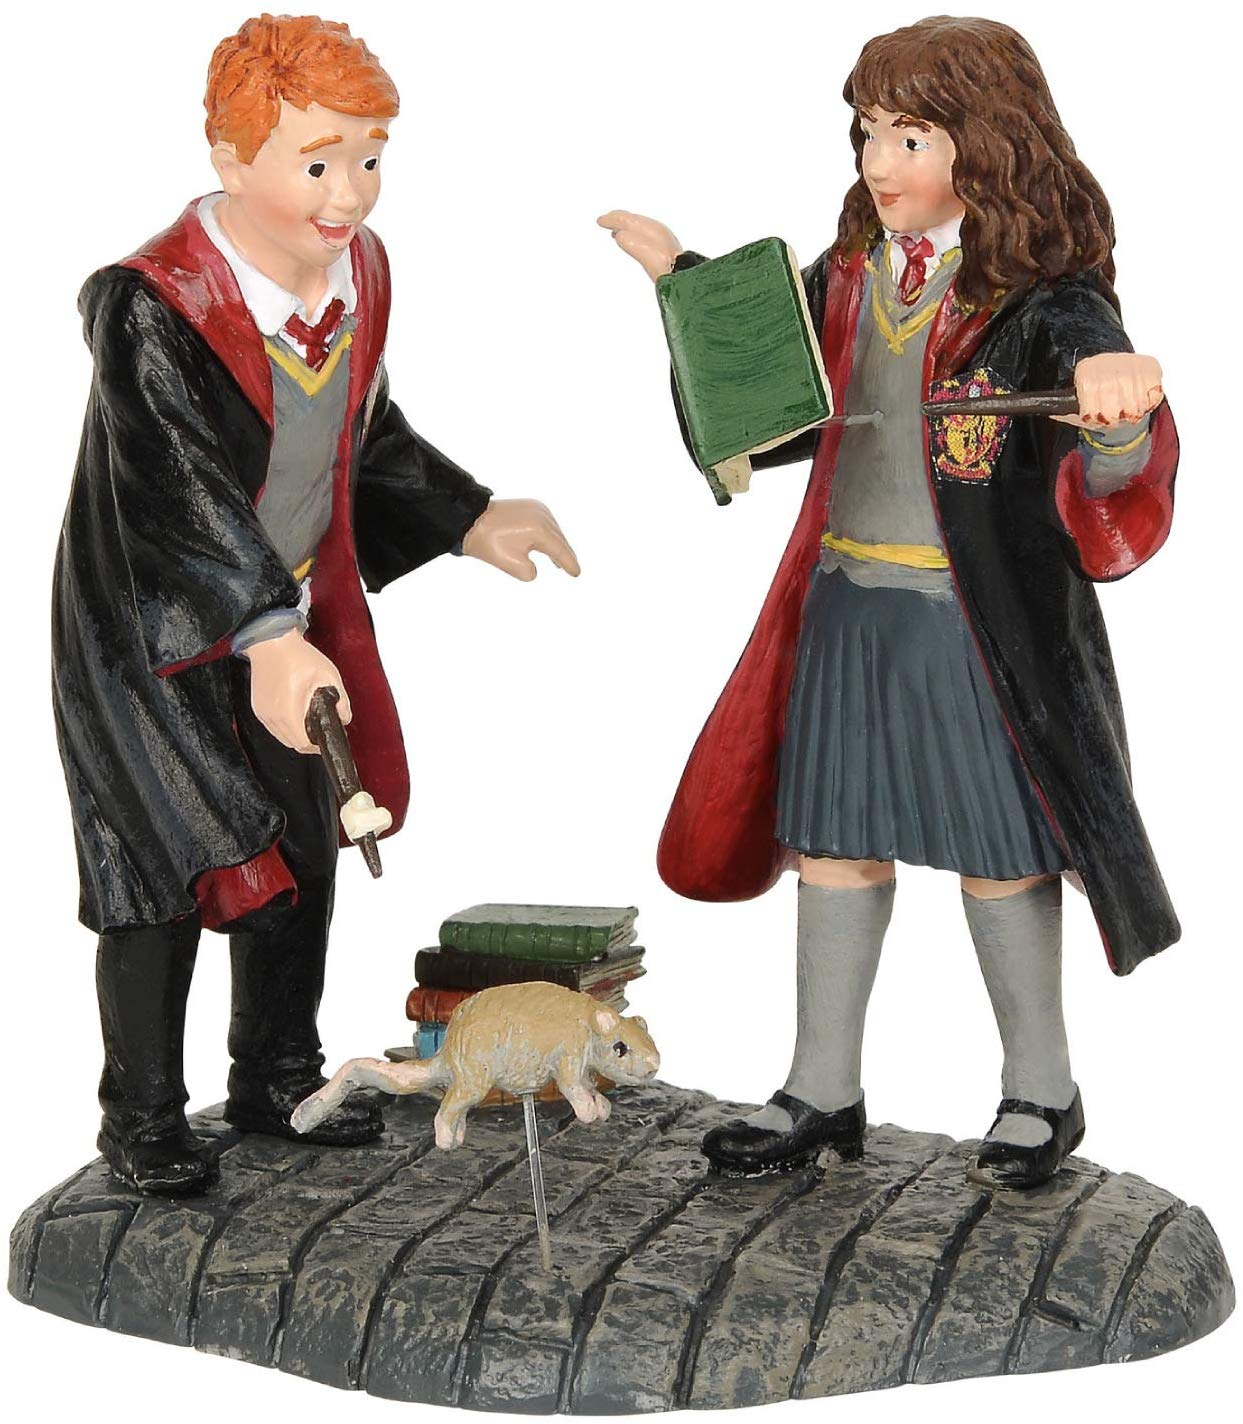 Department 56 Harry Potter Village Accessories Wingardium Leviosa Figurine